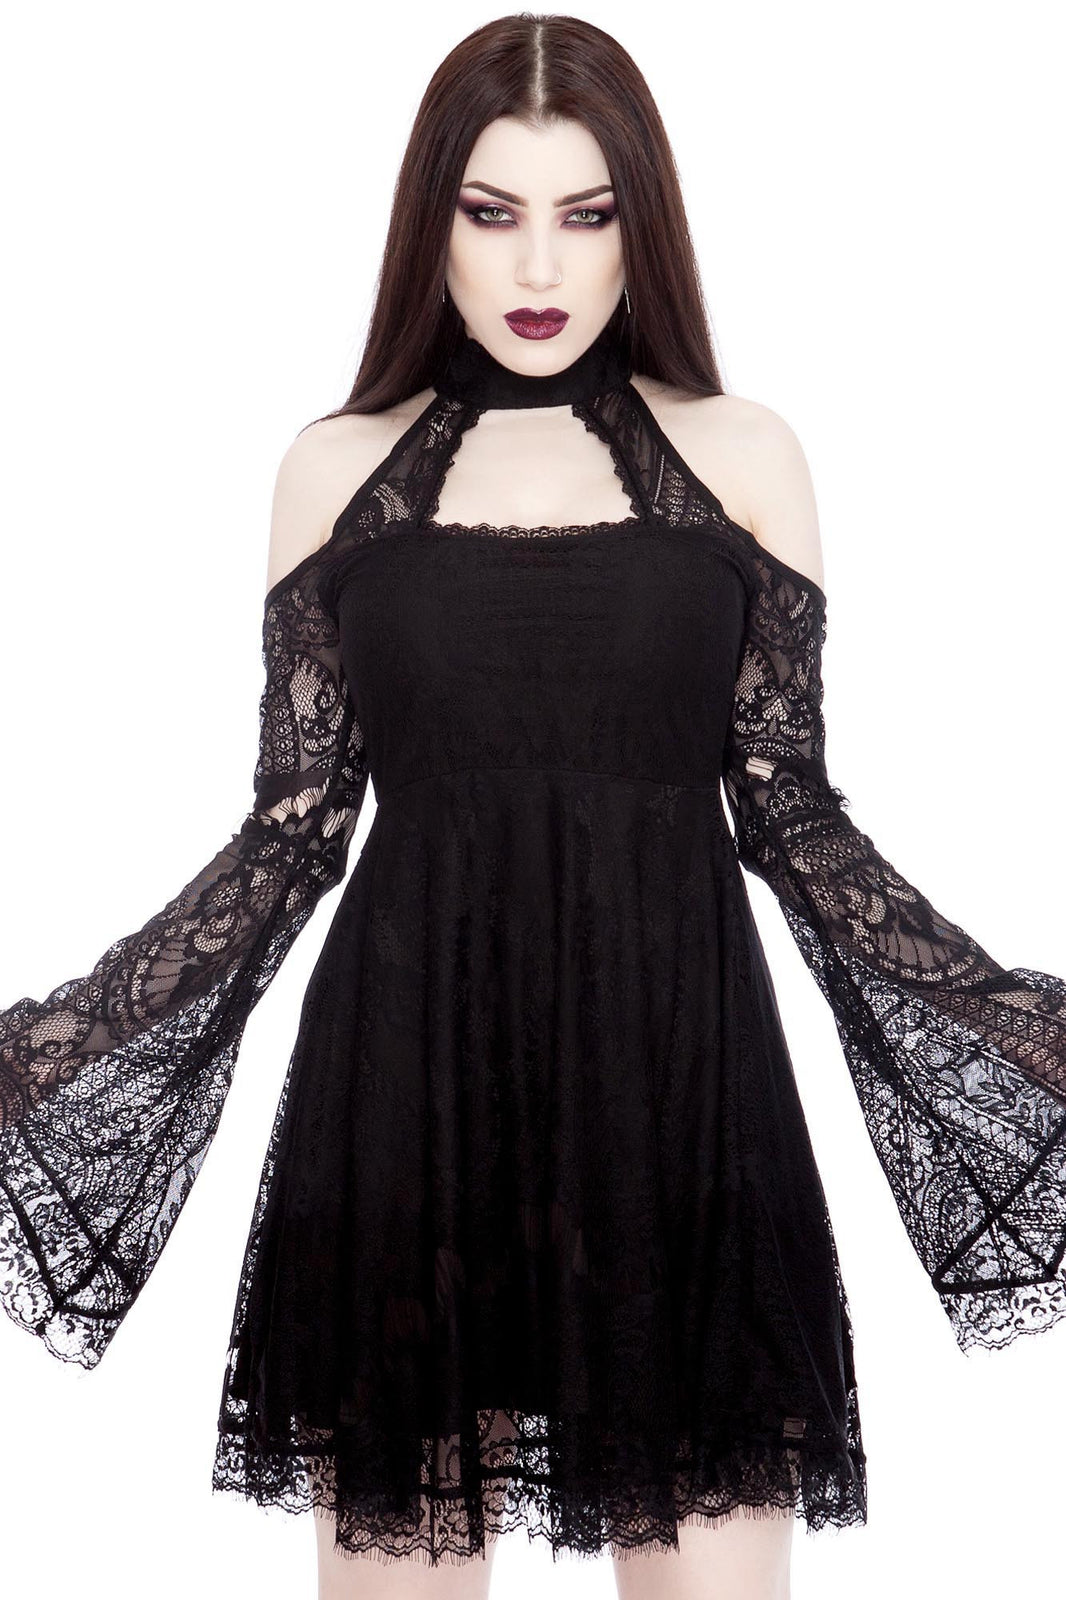 Bella Morte My Maiden Dress [B] - Shop Now - us.KILLSTAR.com